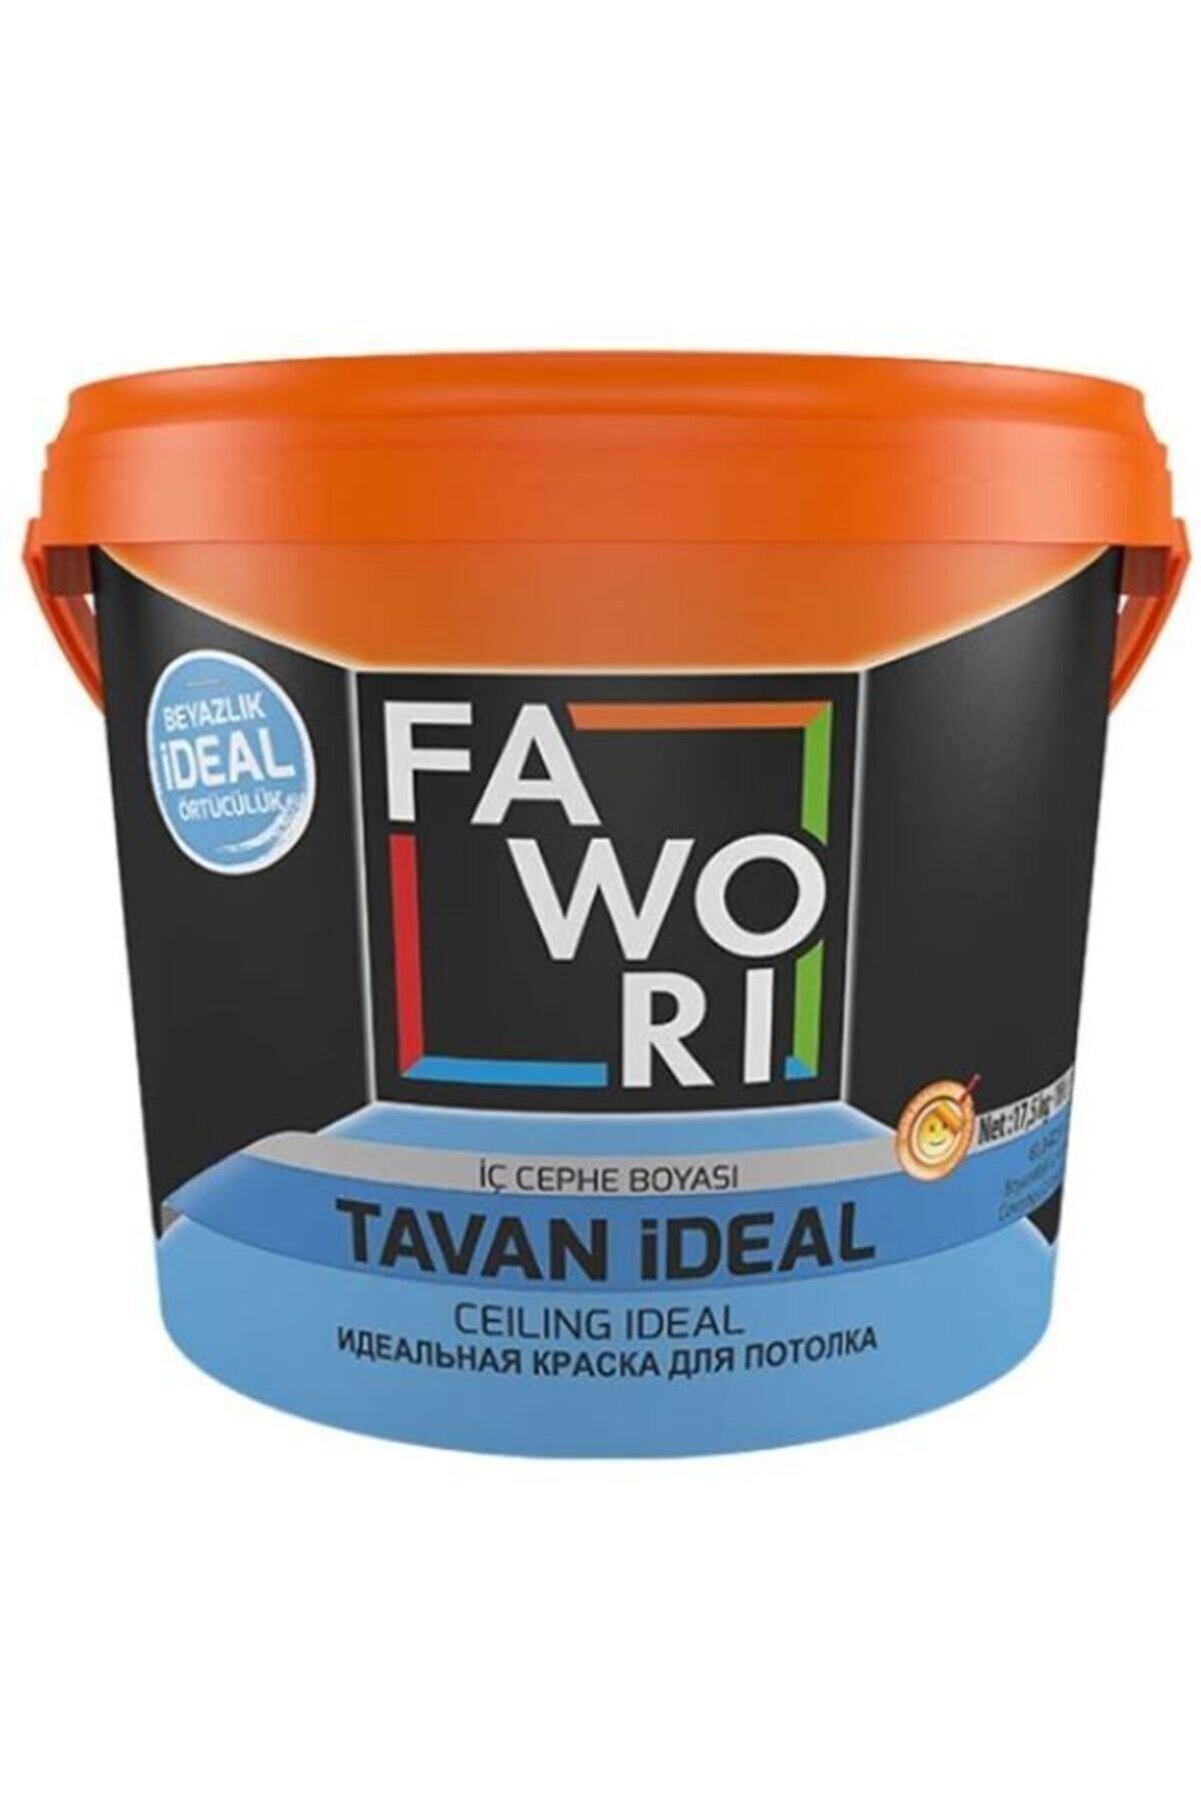 Fawori Tavan Ideal 10kg